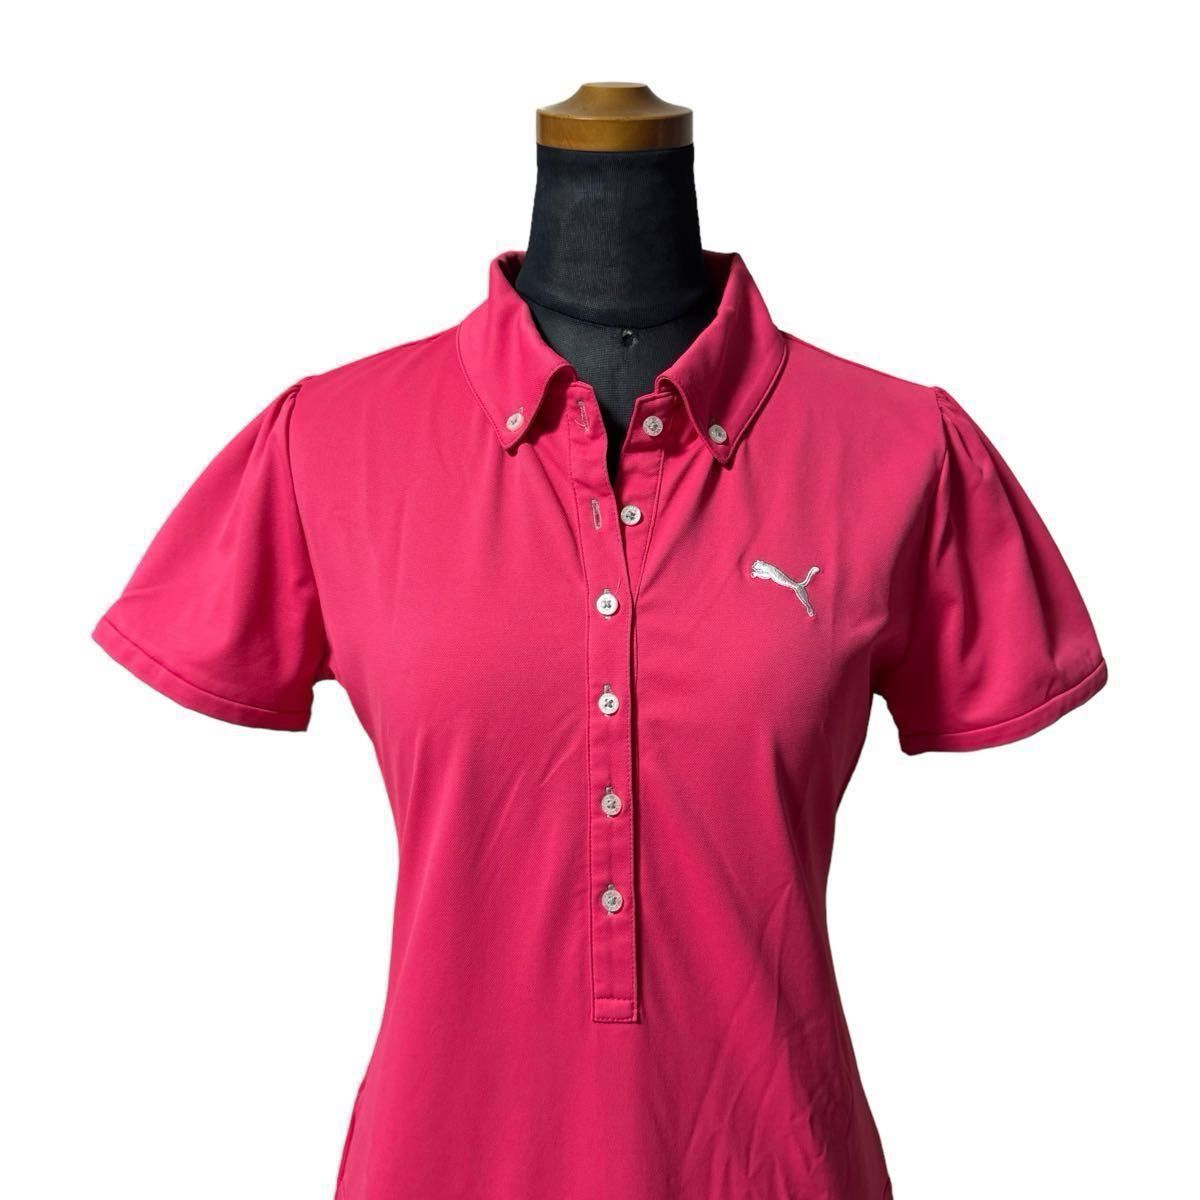 Puma プーマ ゴルフワンピース サイズM ピンク ワンポイントロゴ ポリエステル素材 ストレッチ ゴルフウェア